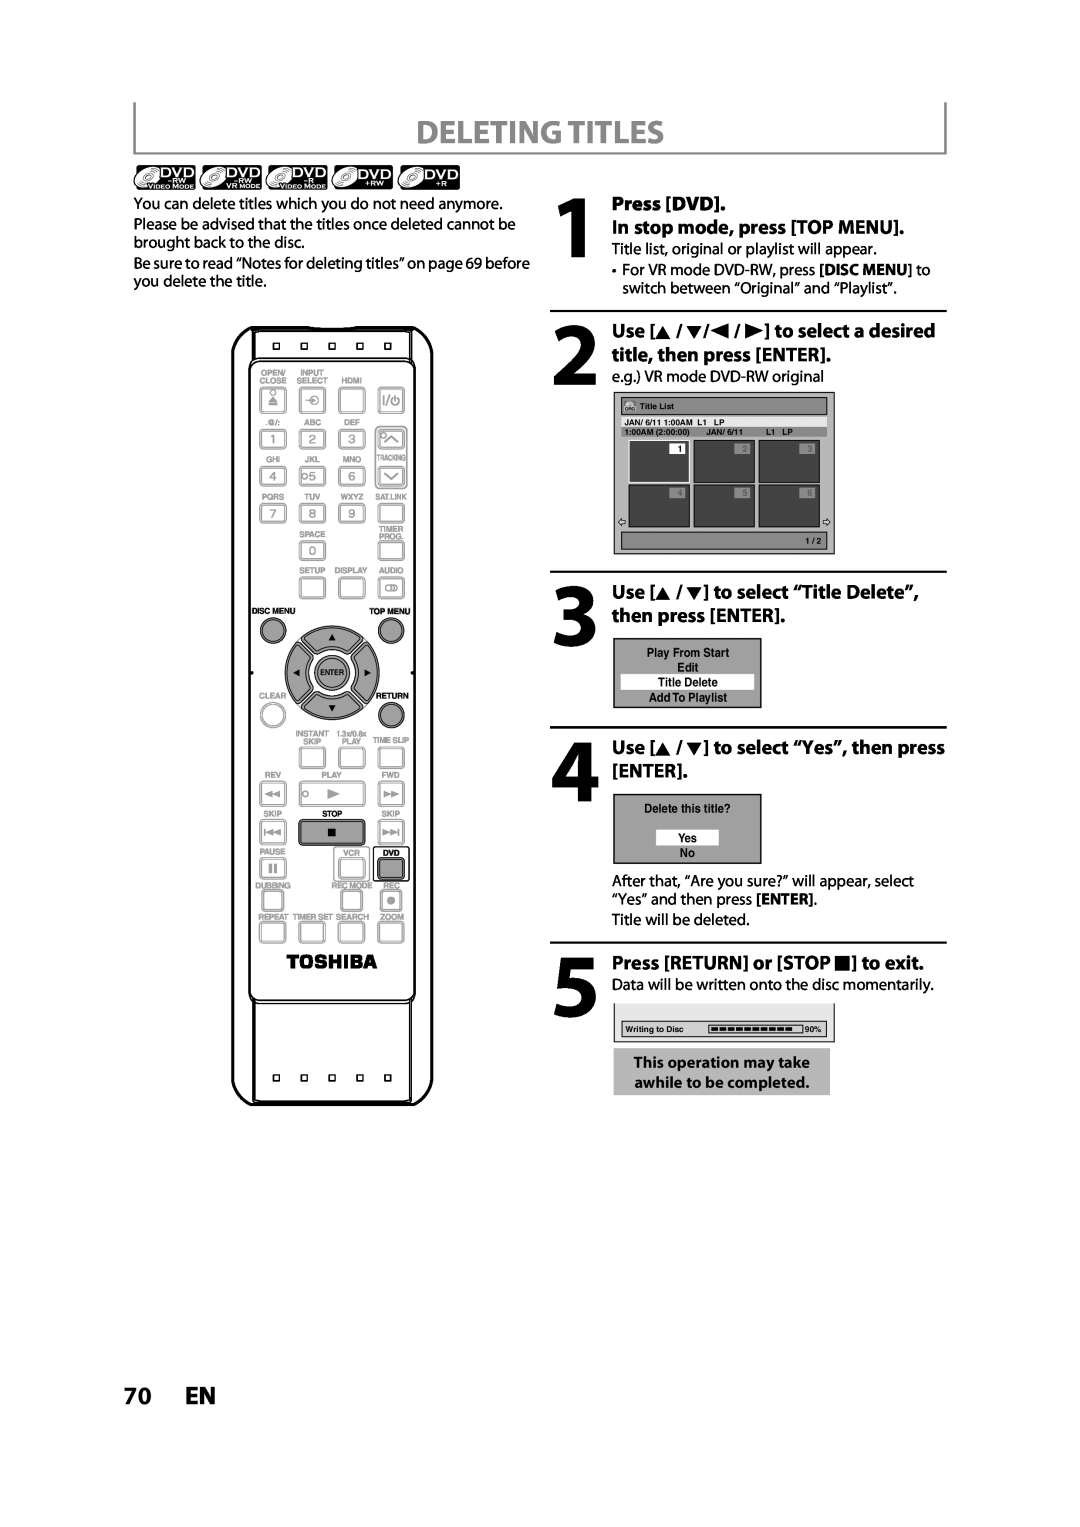 Toshiba DVR620KC owner manual Deleting Titles, 70 EN, Use K / L to select “Title Delete”, then press ENTER, Press DVD 